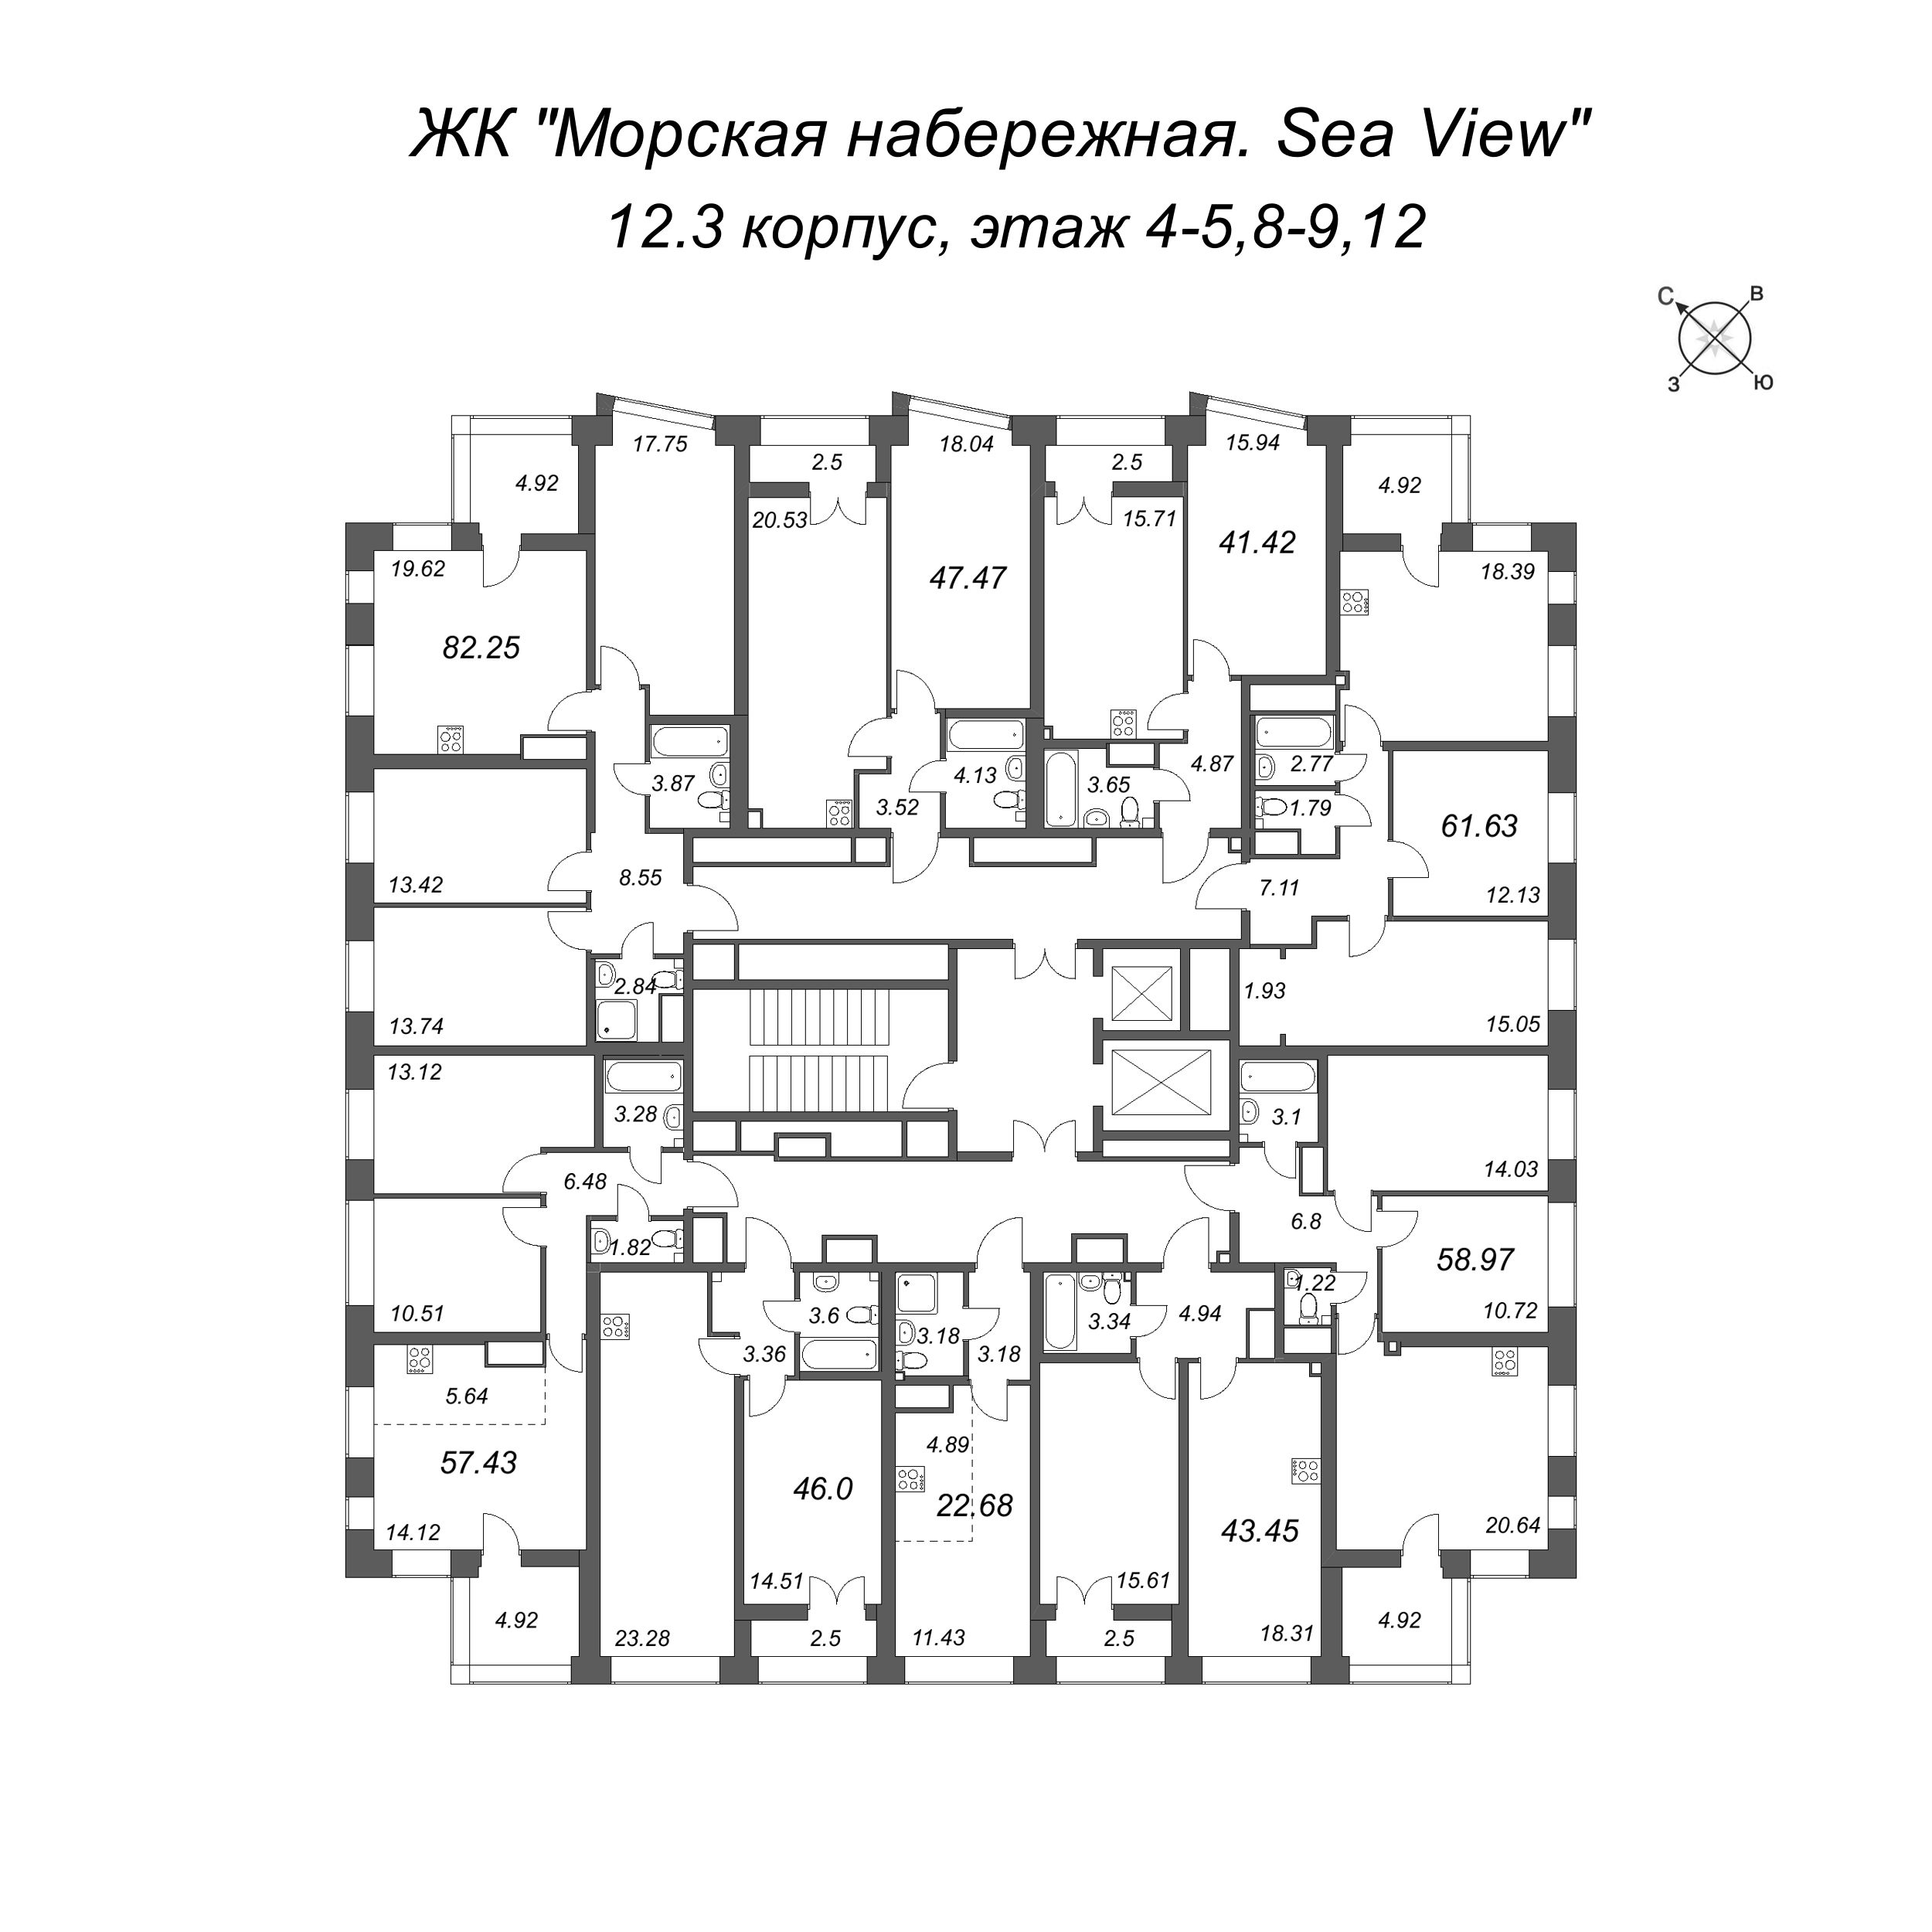 4-комнатная (Евро) квартира, 82.25 м² - планировка этажа